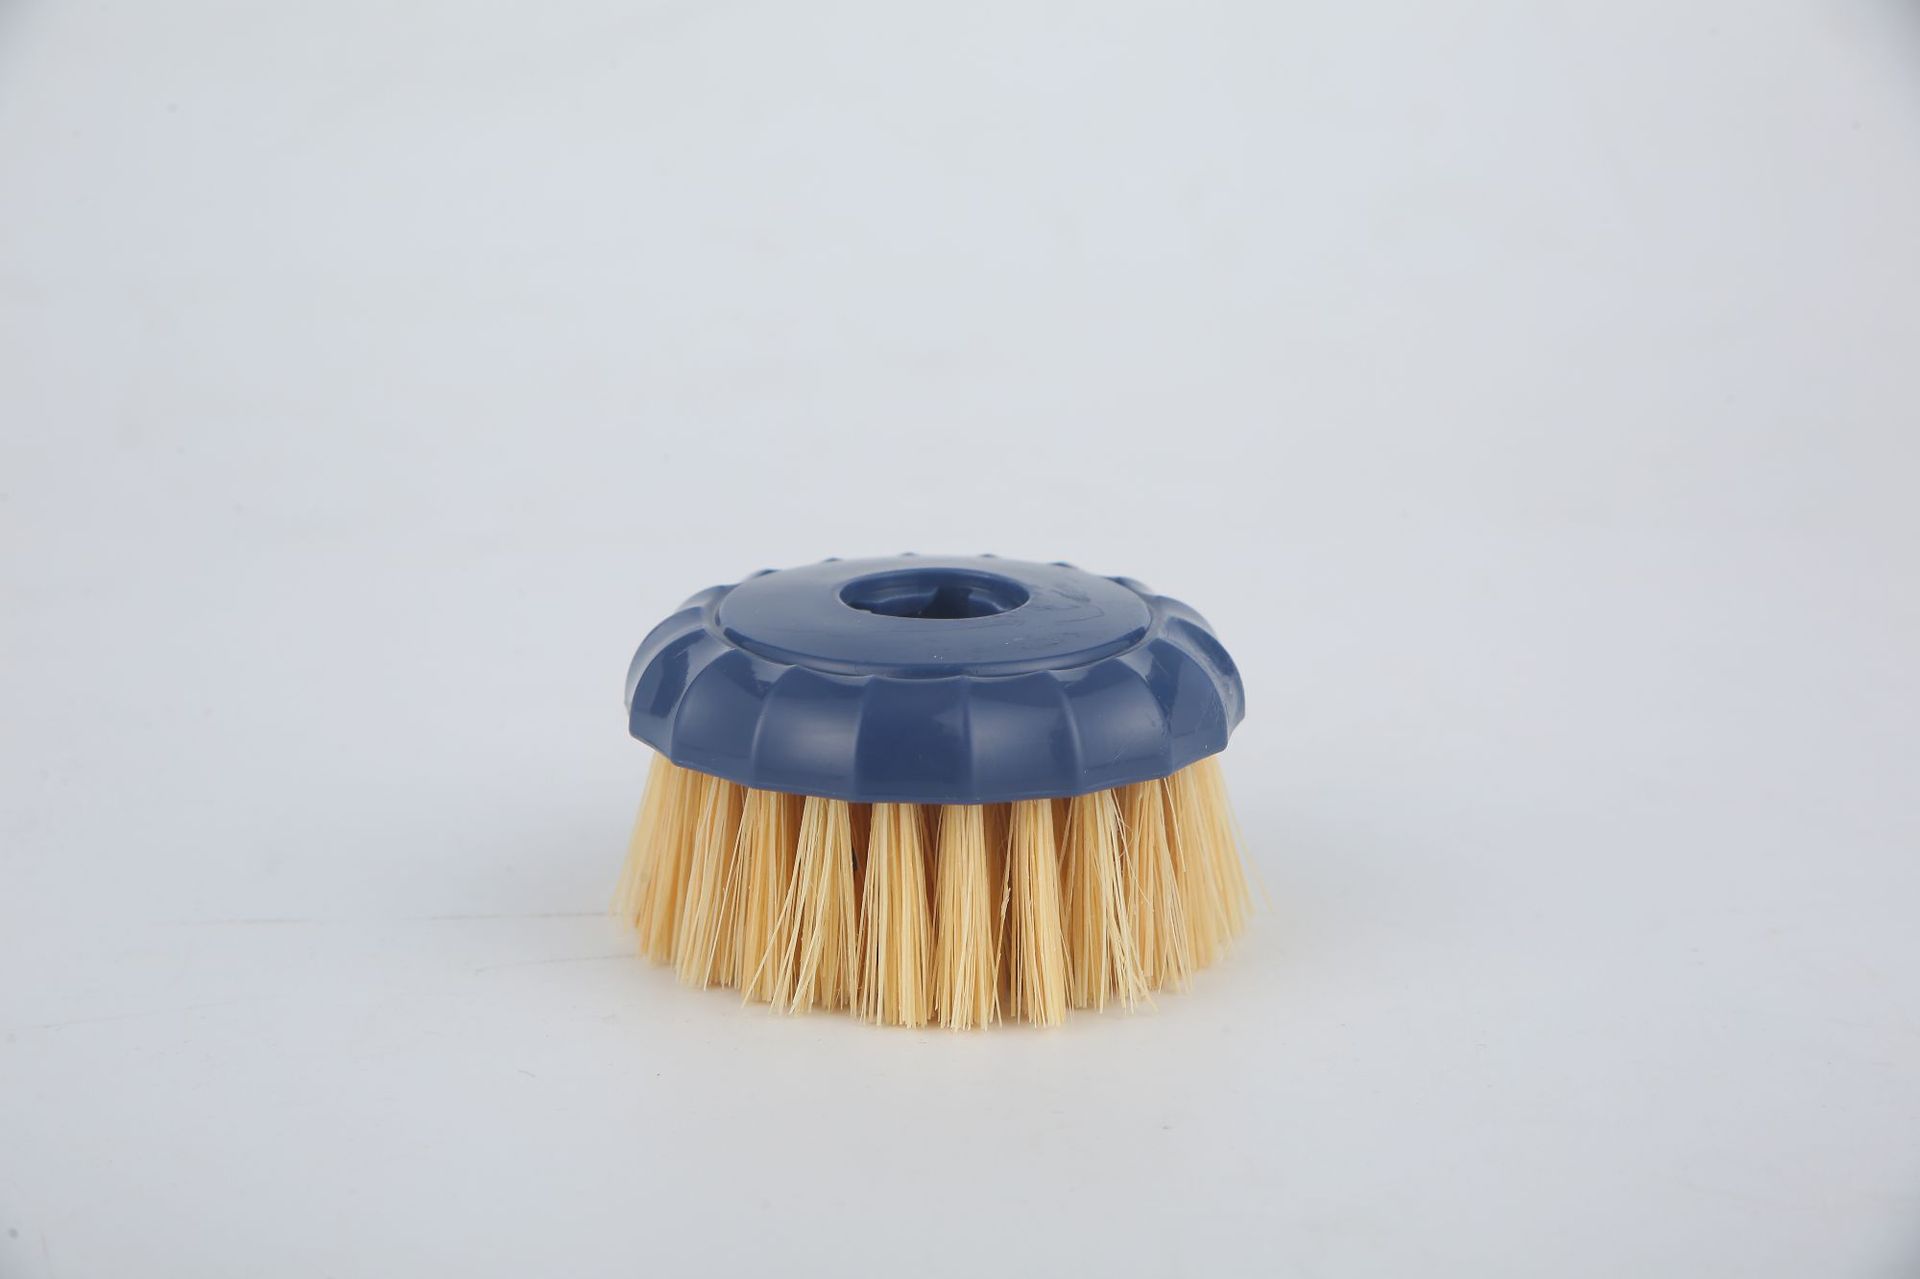 Sisal Wok Brush Liquid Adding Dish Brush Press Dish Brush Oil-Free Plastic Multi-Function Cleaning Ball Cleaning Brush